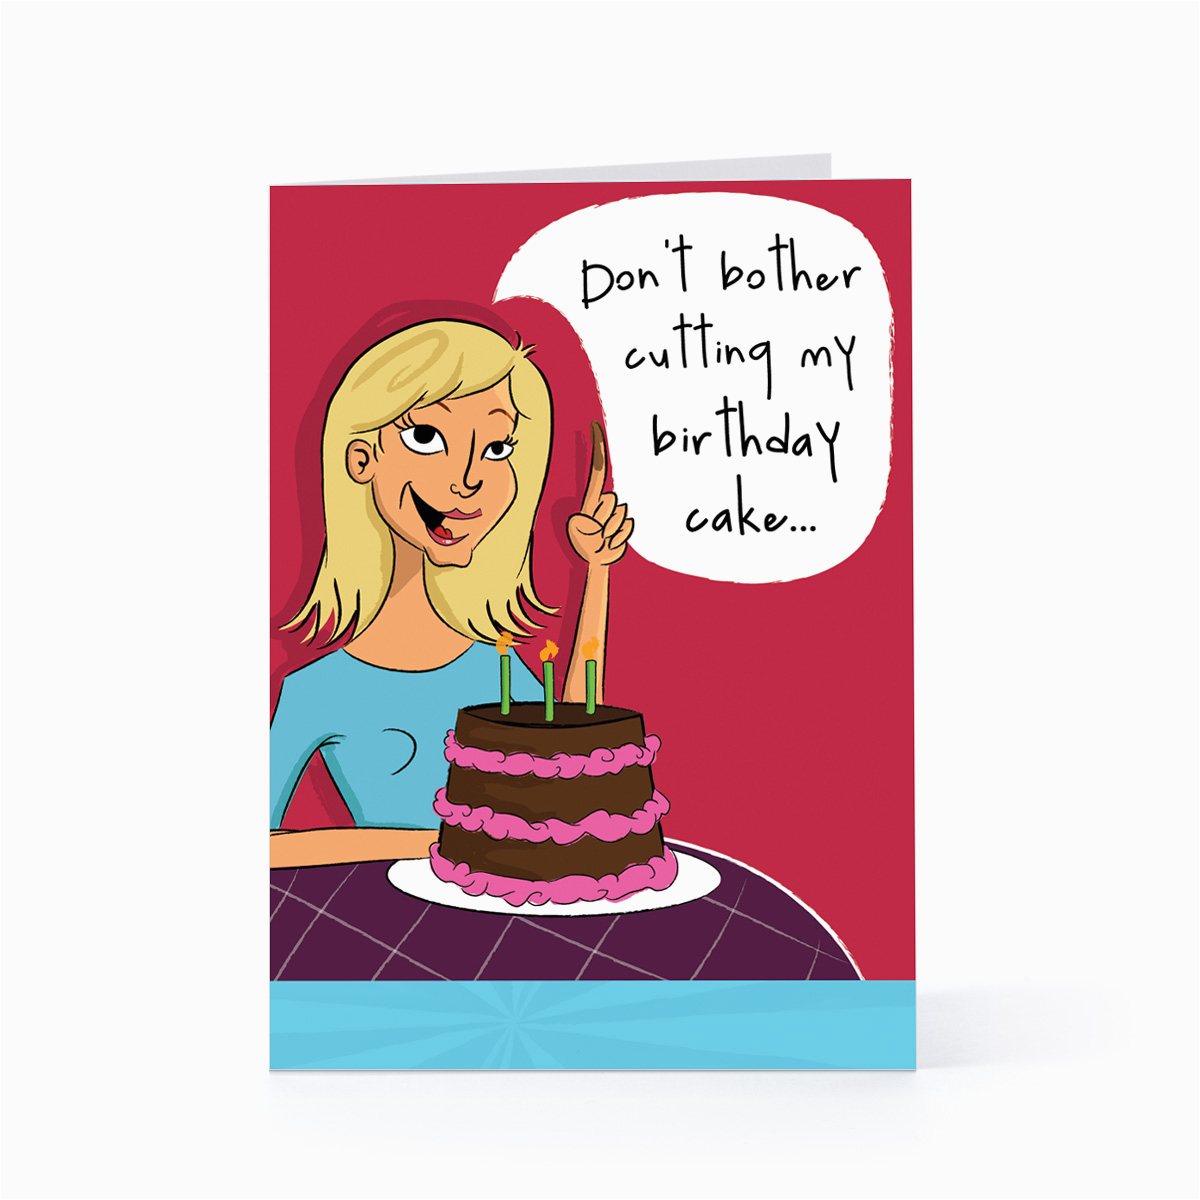 hallmark card quotes for birthdays